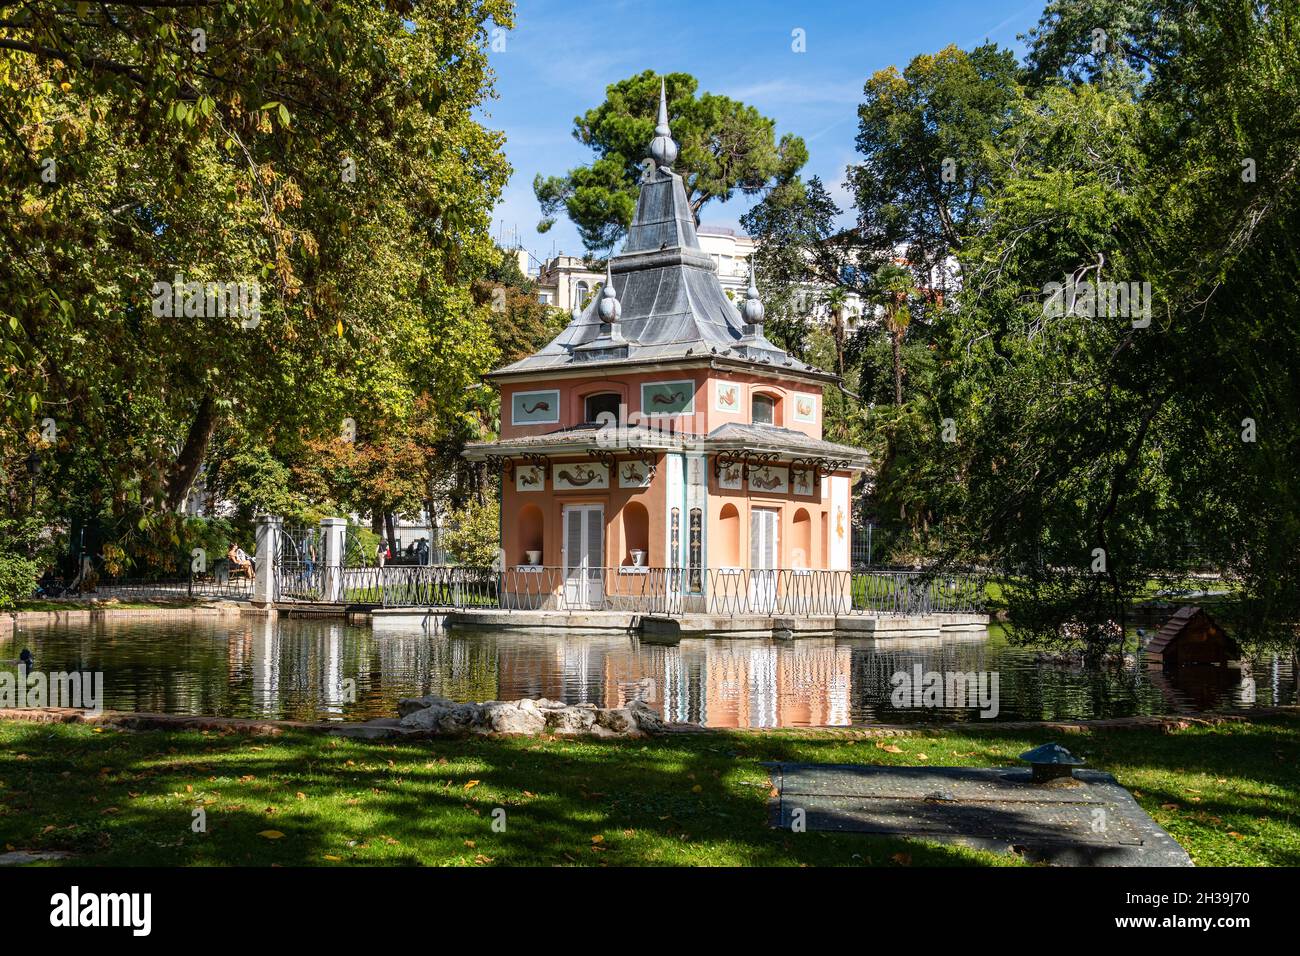 Madrid, Spain - September 26, 2021: Casita del Pescador or Fisherman Cottage in the Retiro Park Stock Photo